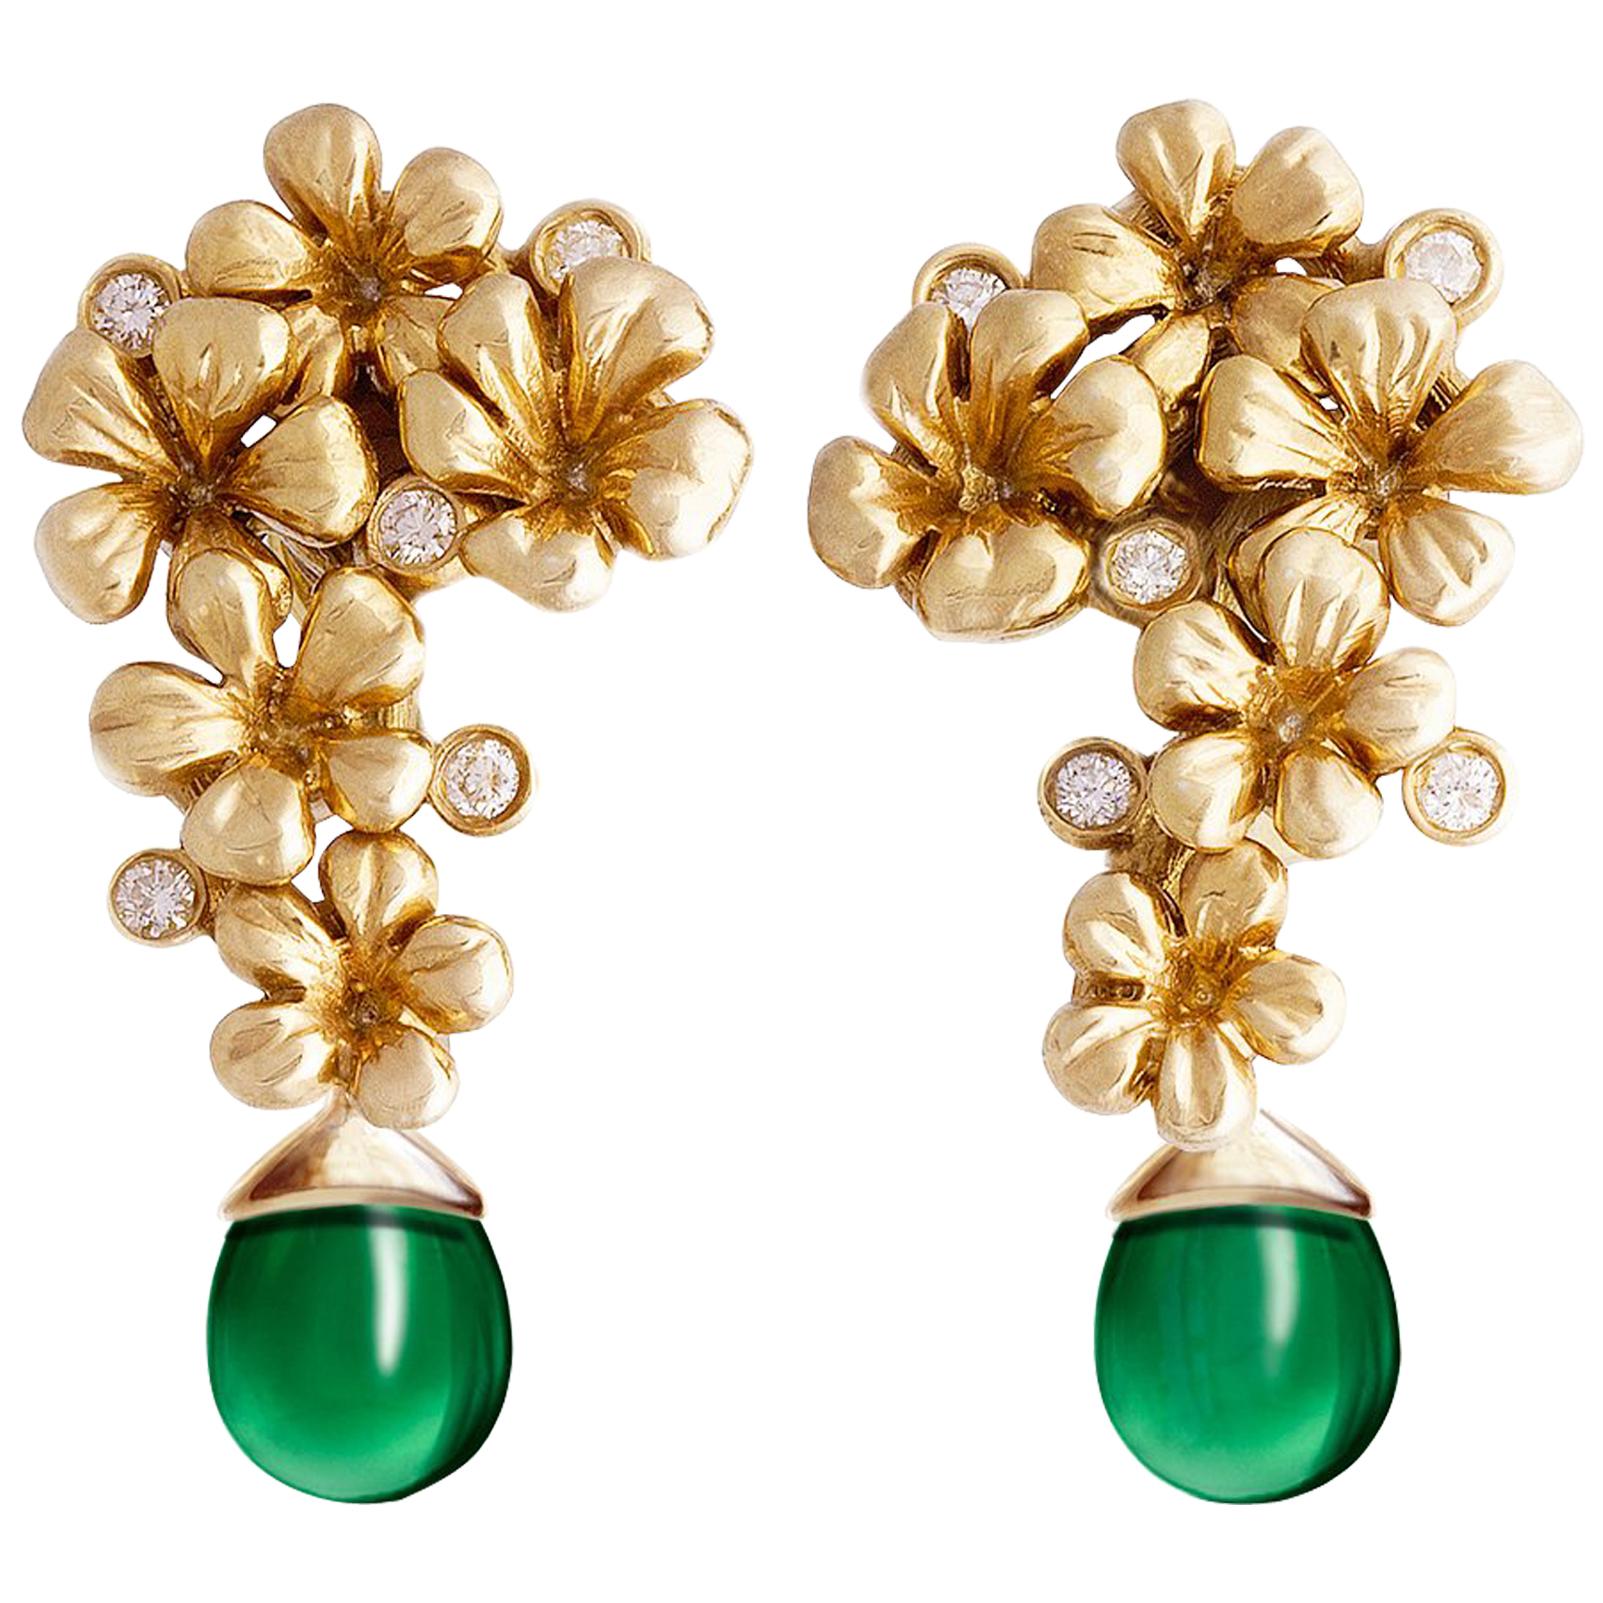 14 Karat Yellow Gold Art Nouveau Blossom Earrings with Natural Diamonds